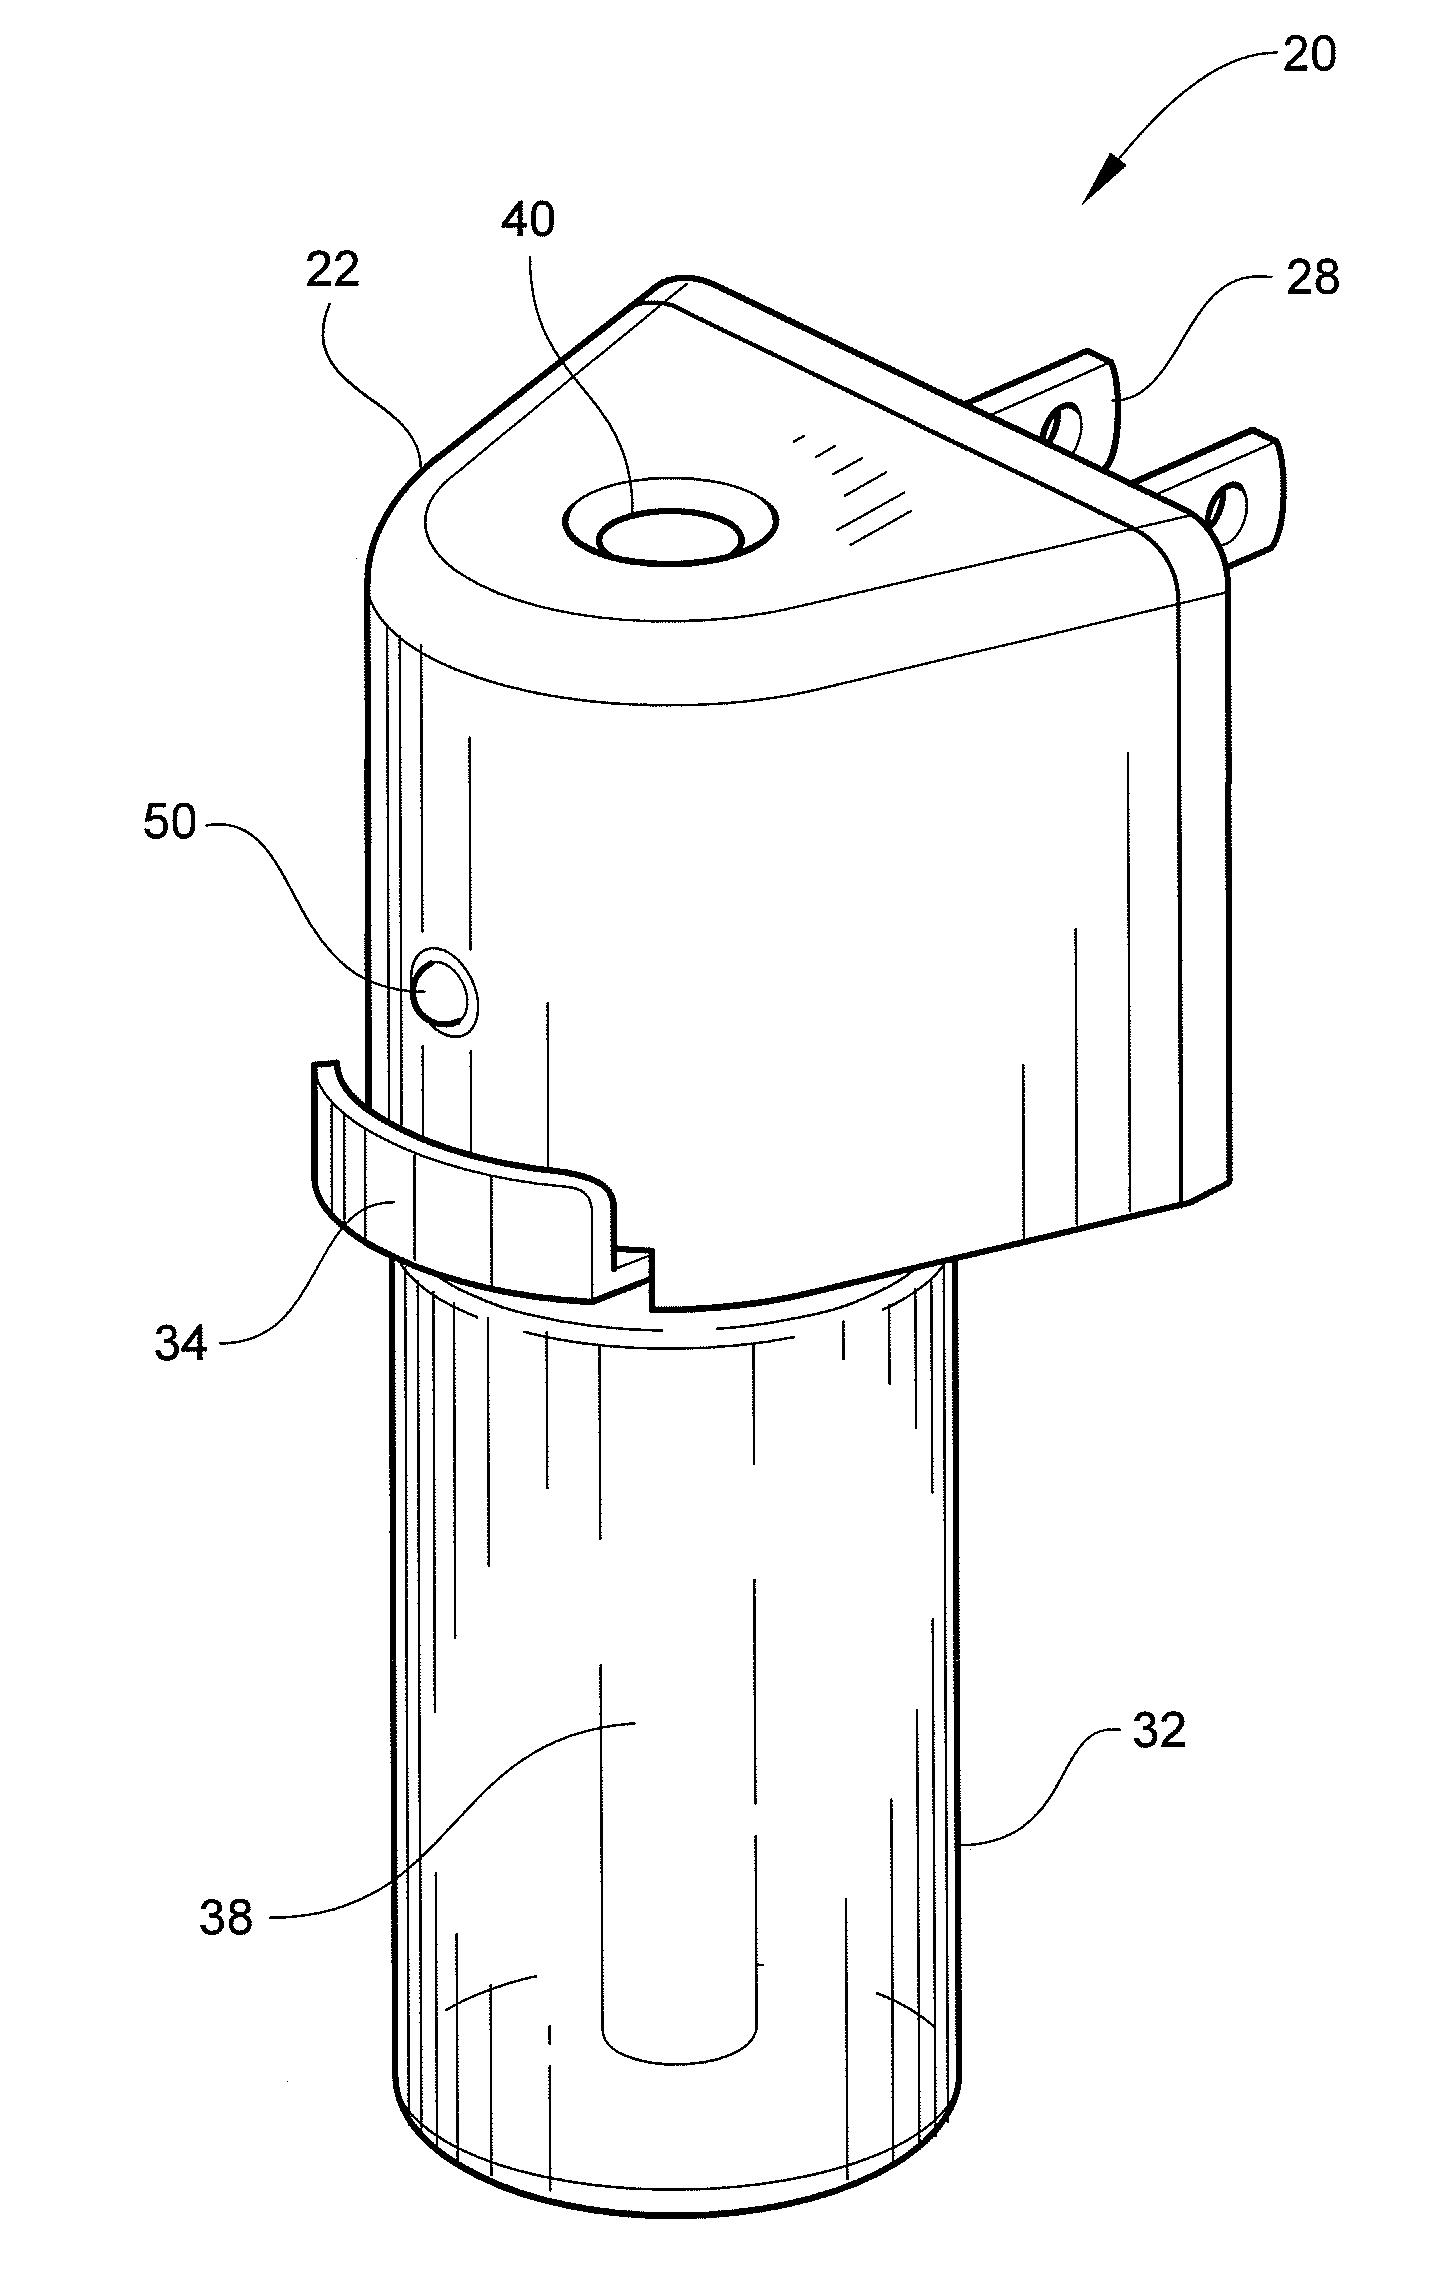 Vapor dispenser with indicator